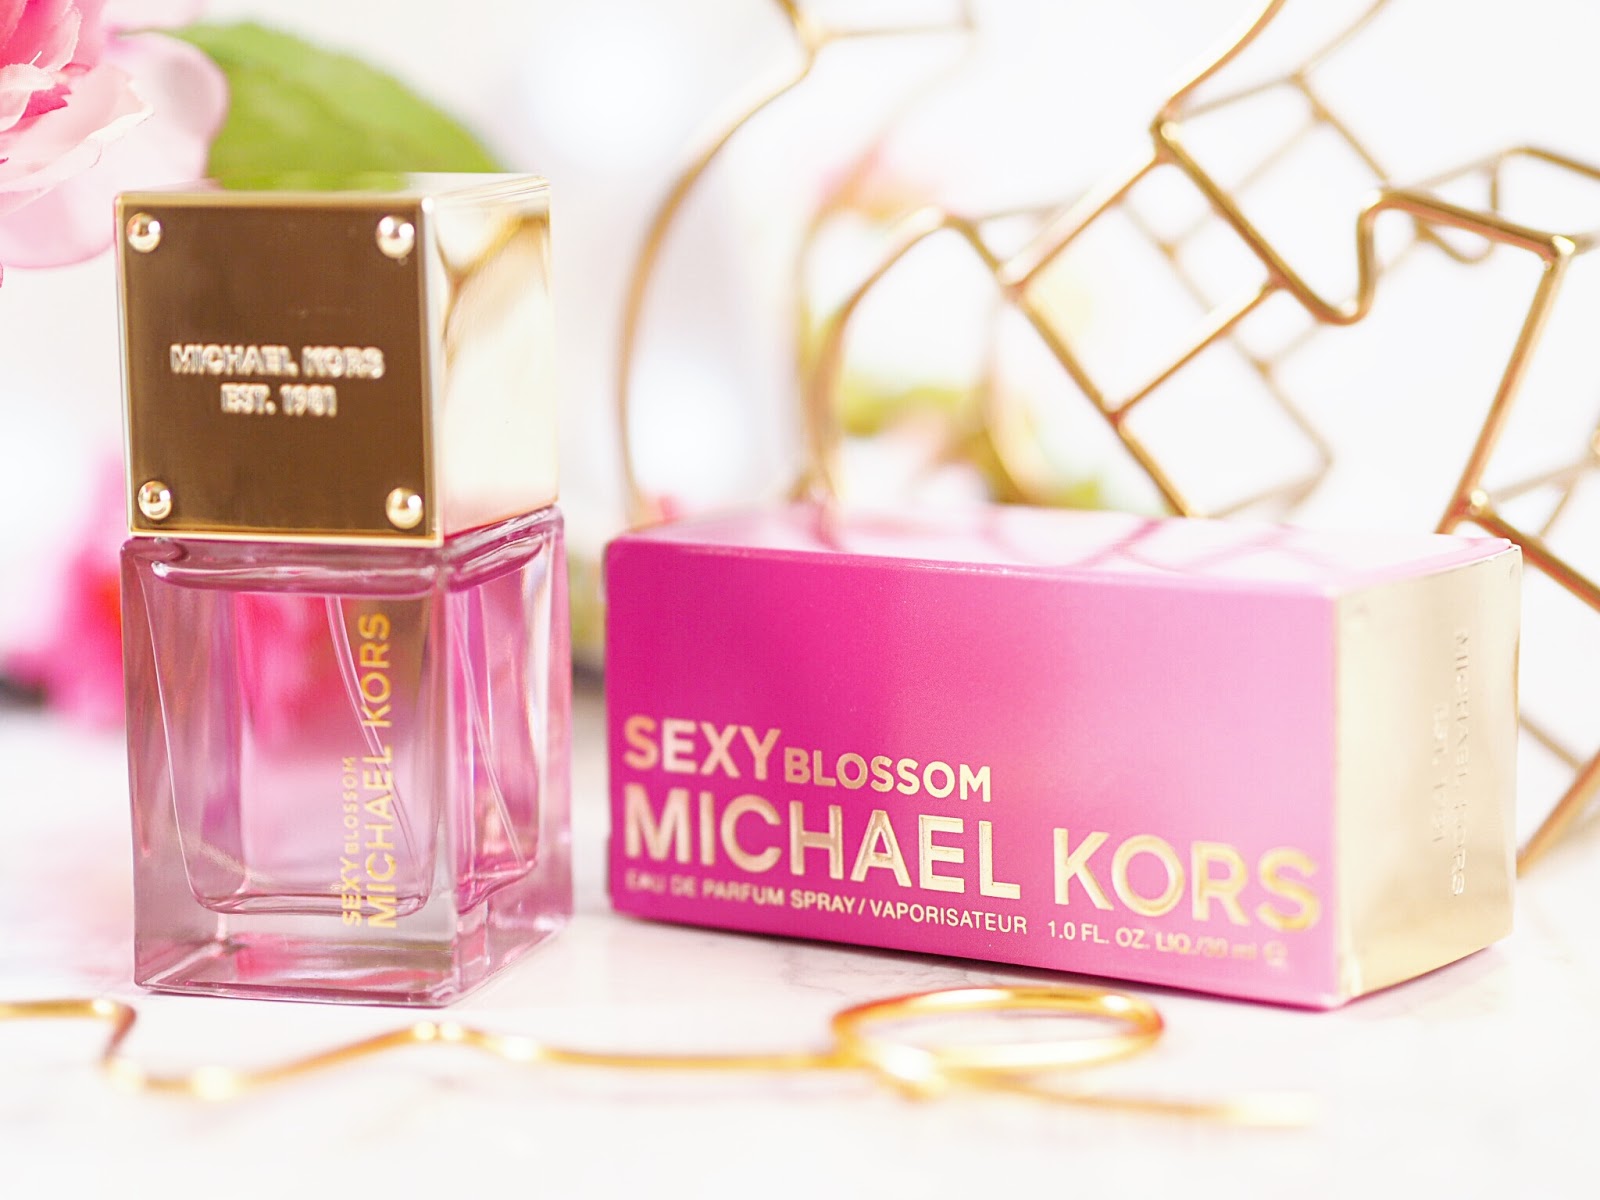 michael kors sexy blossom perfume